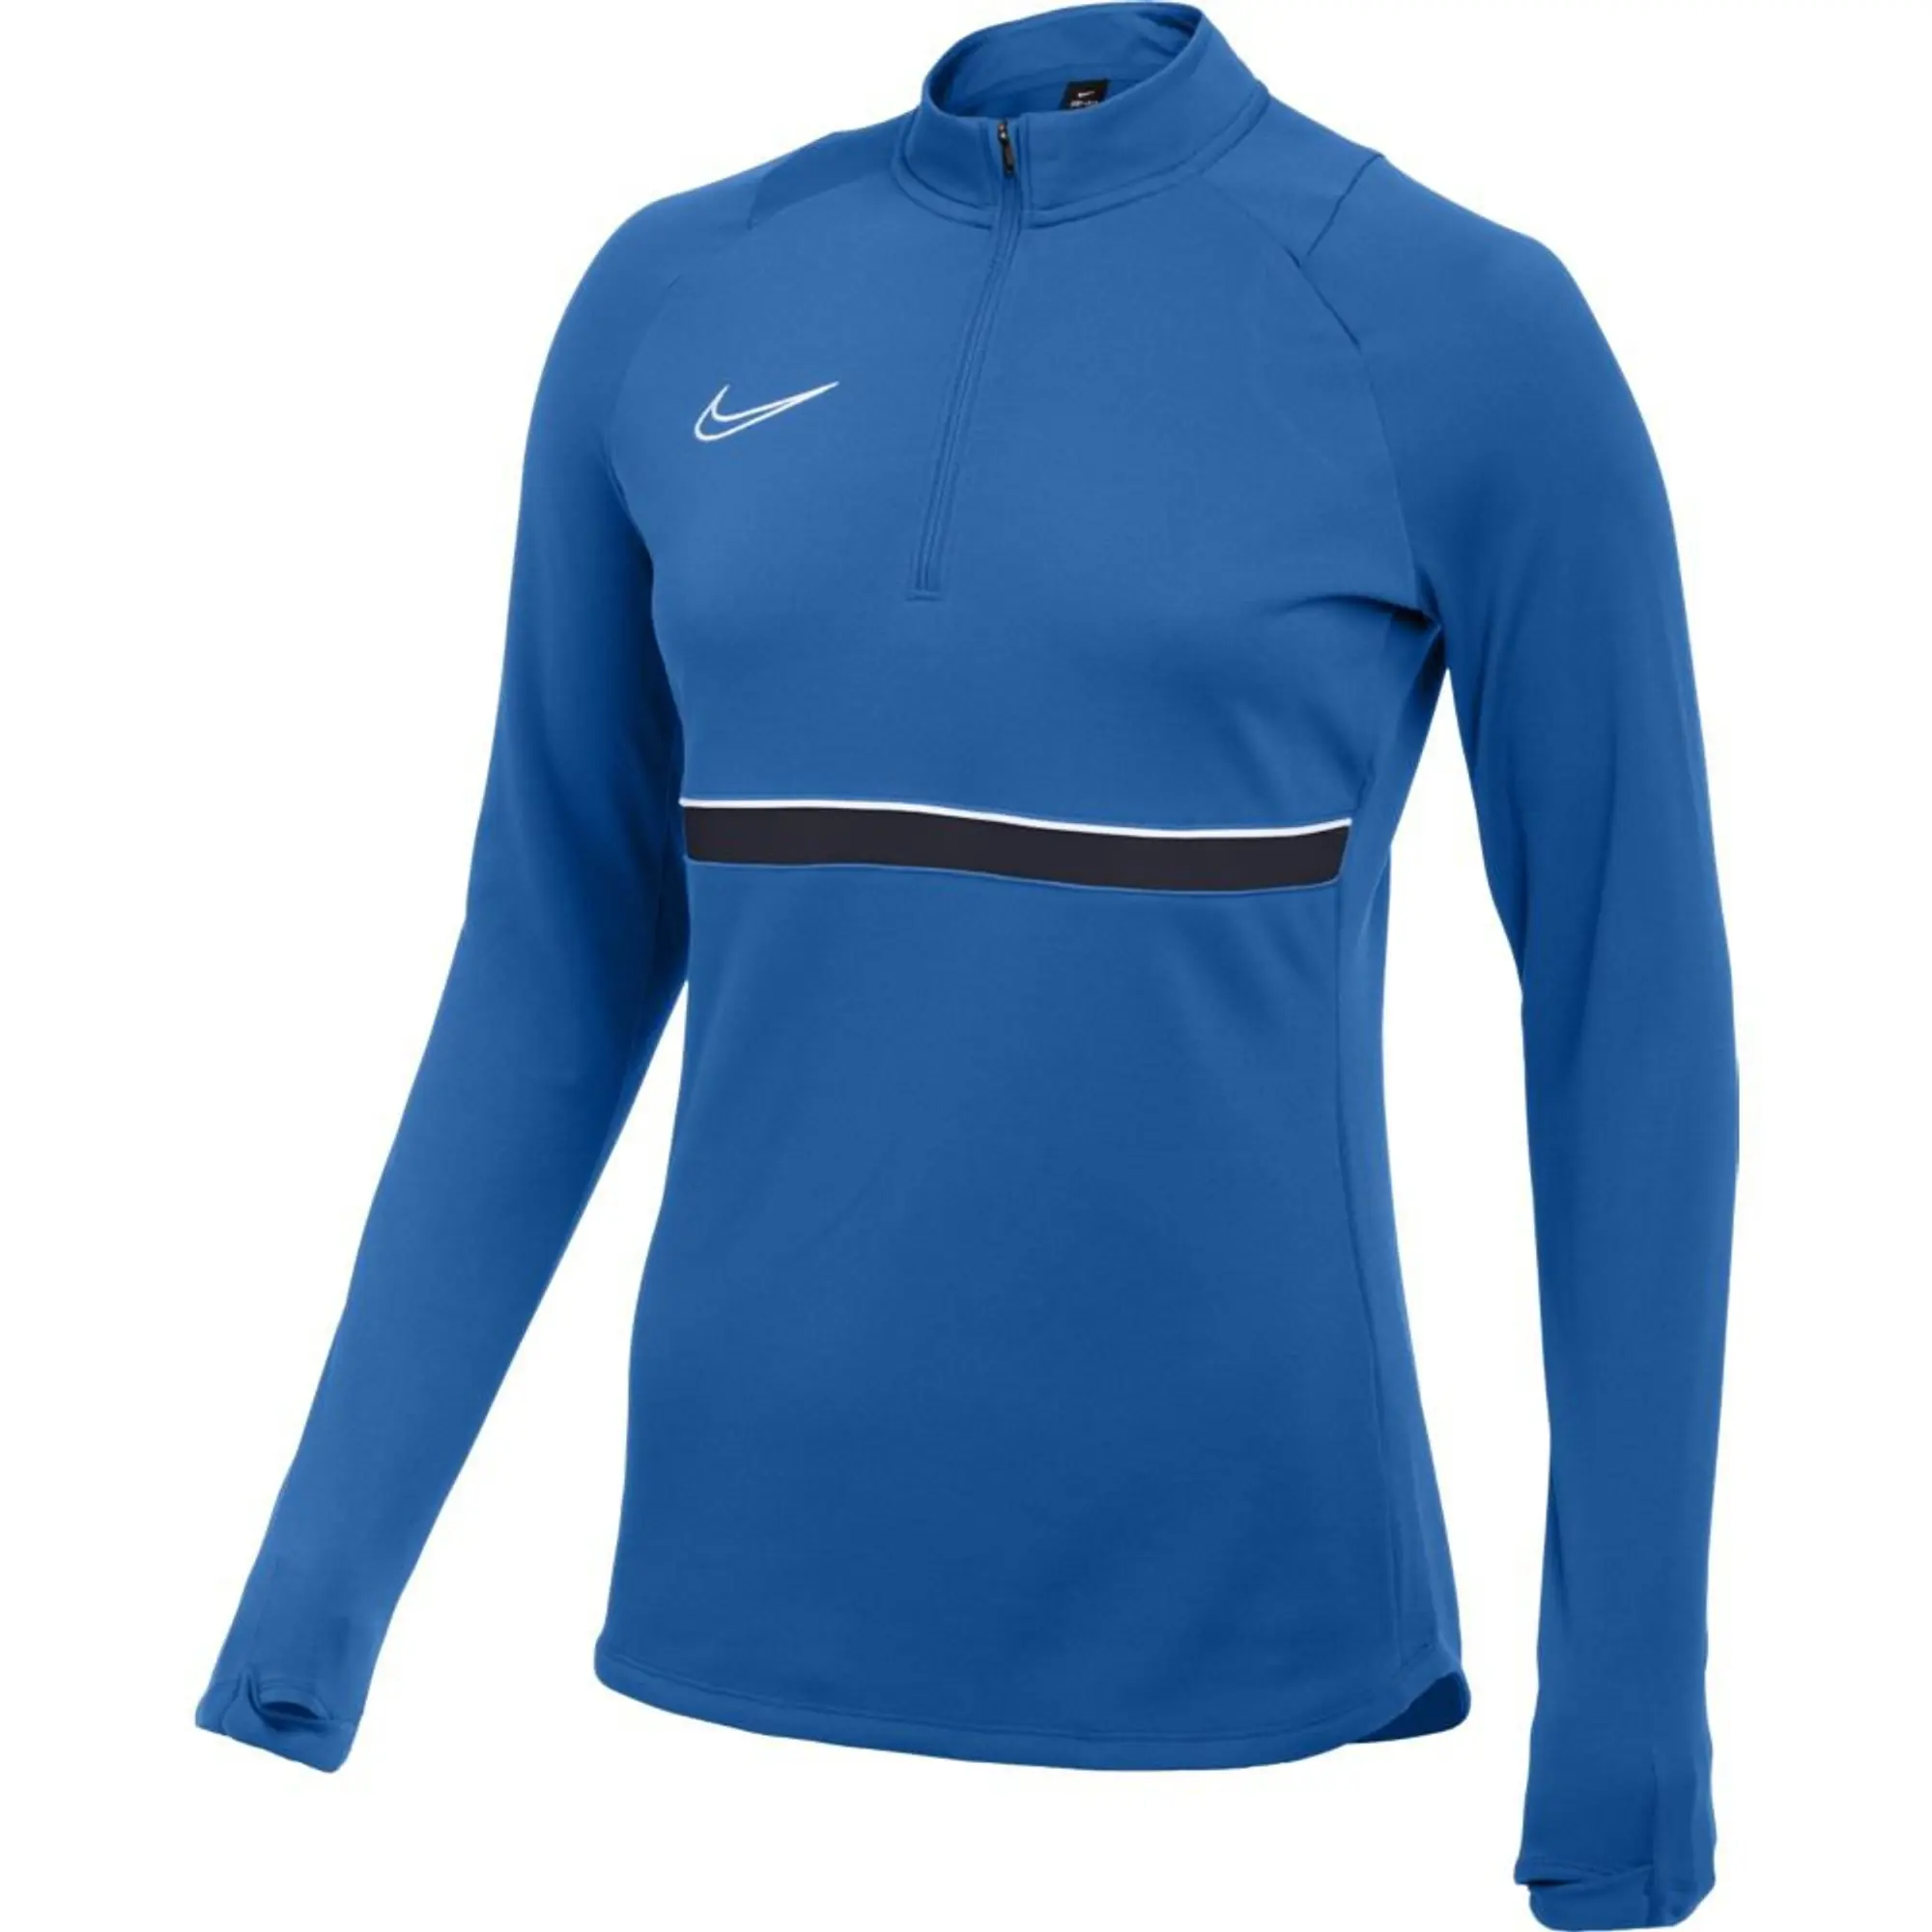 Nike Women's Layer Top - Blue